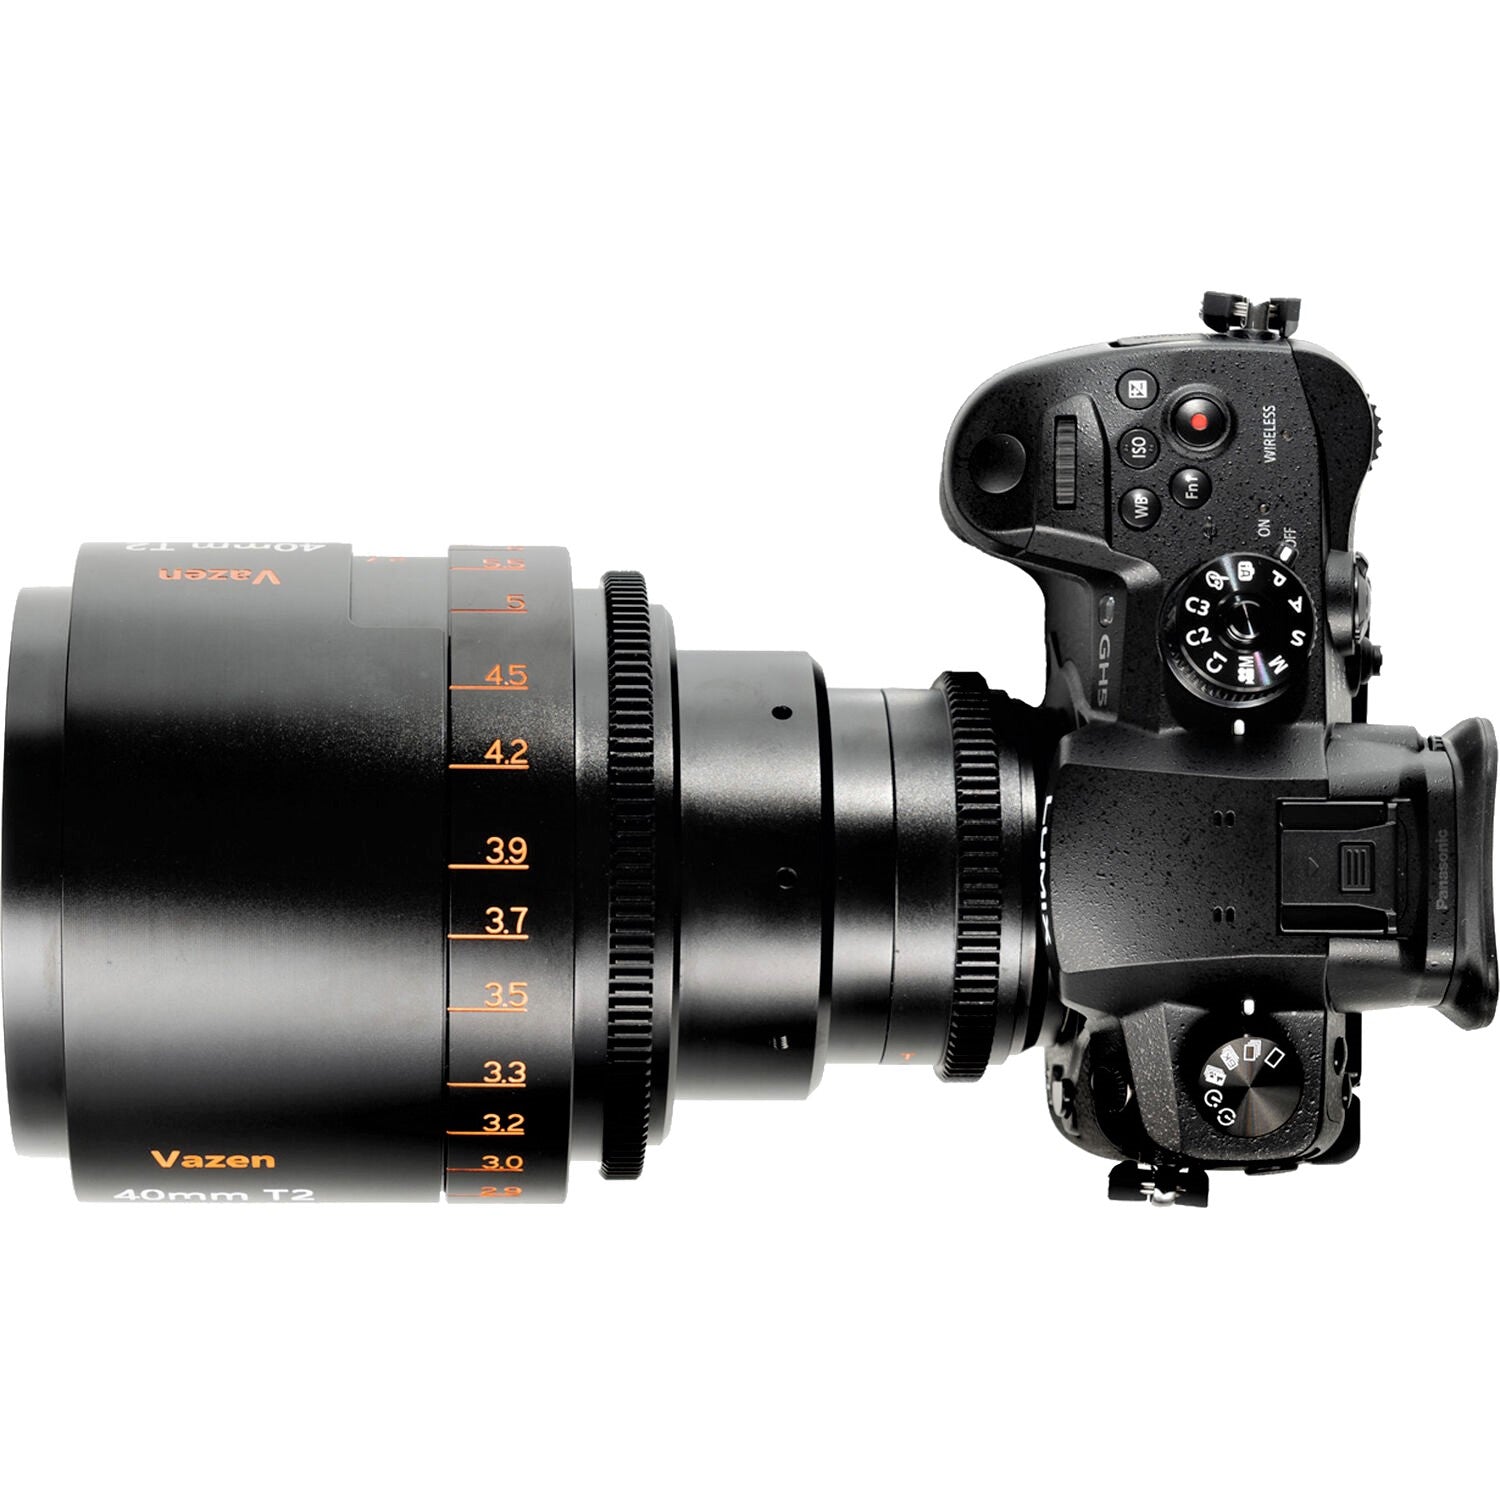 Vazen 40mm T/2 1.8X Anamorphic Lens (MFT